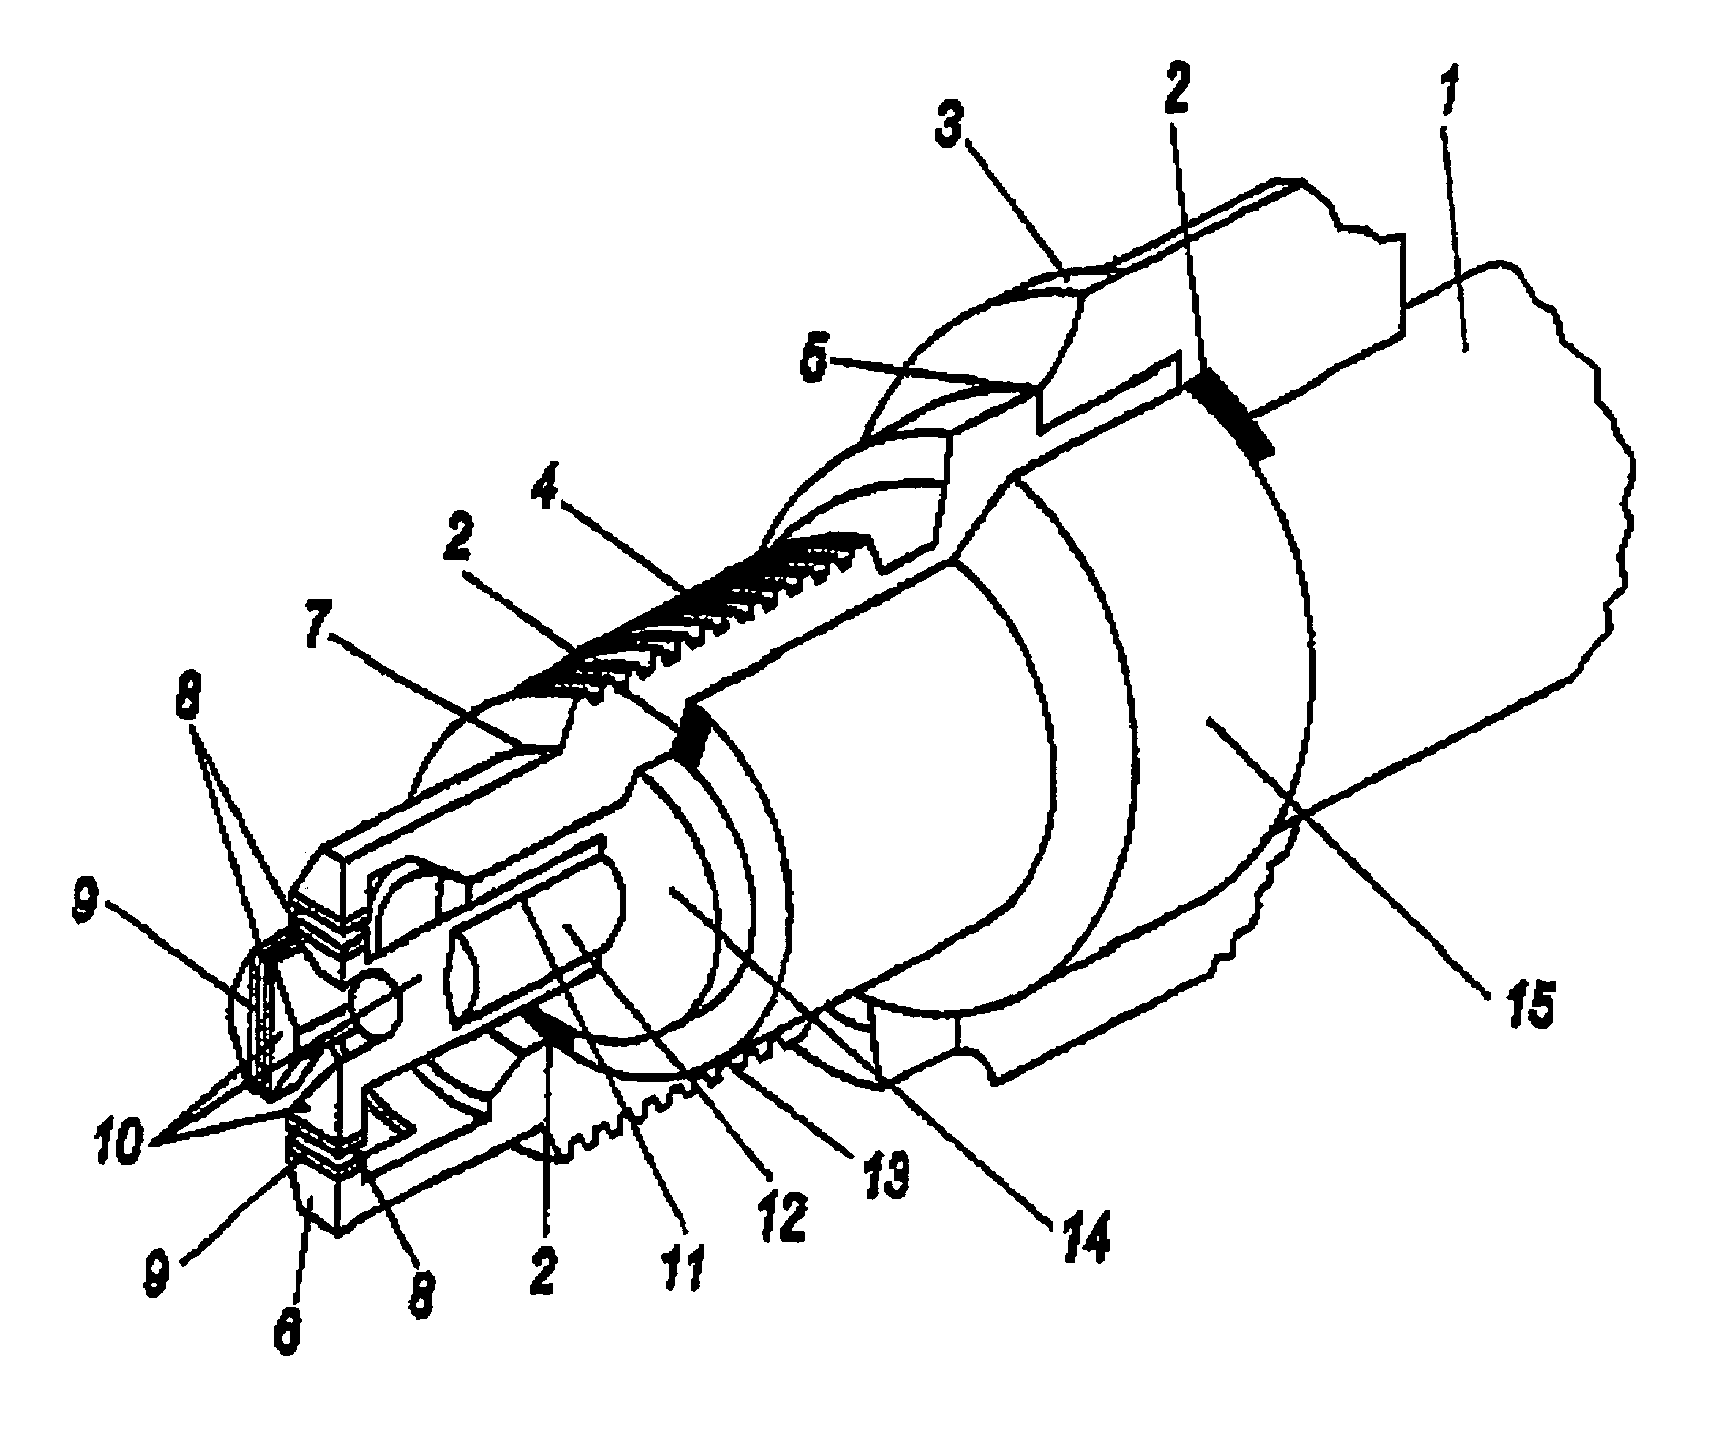 Spark plug of an internal combustion engine